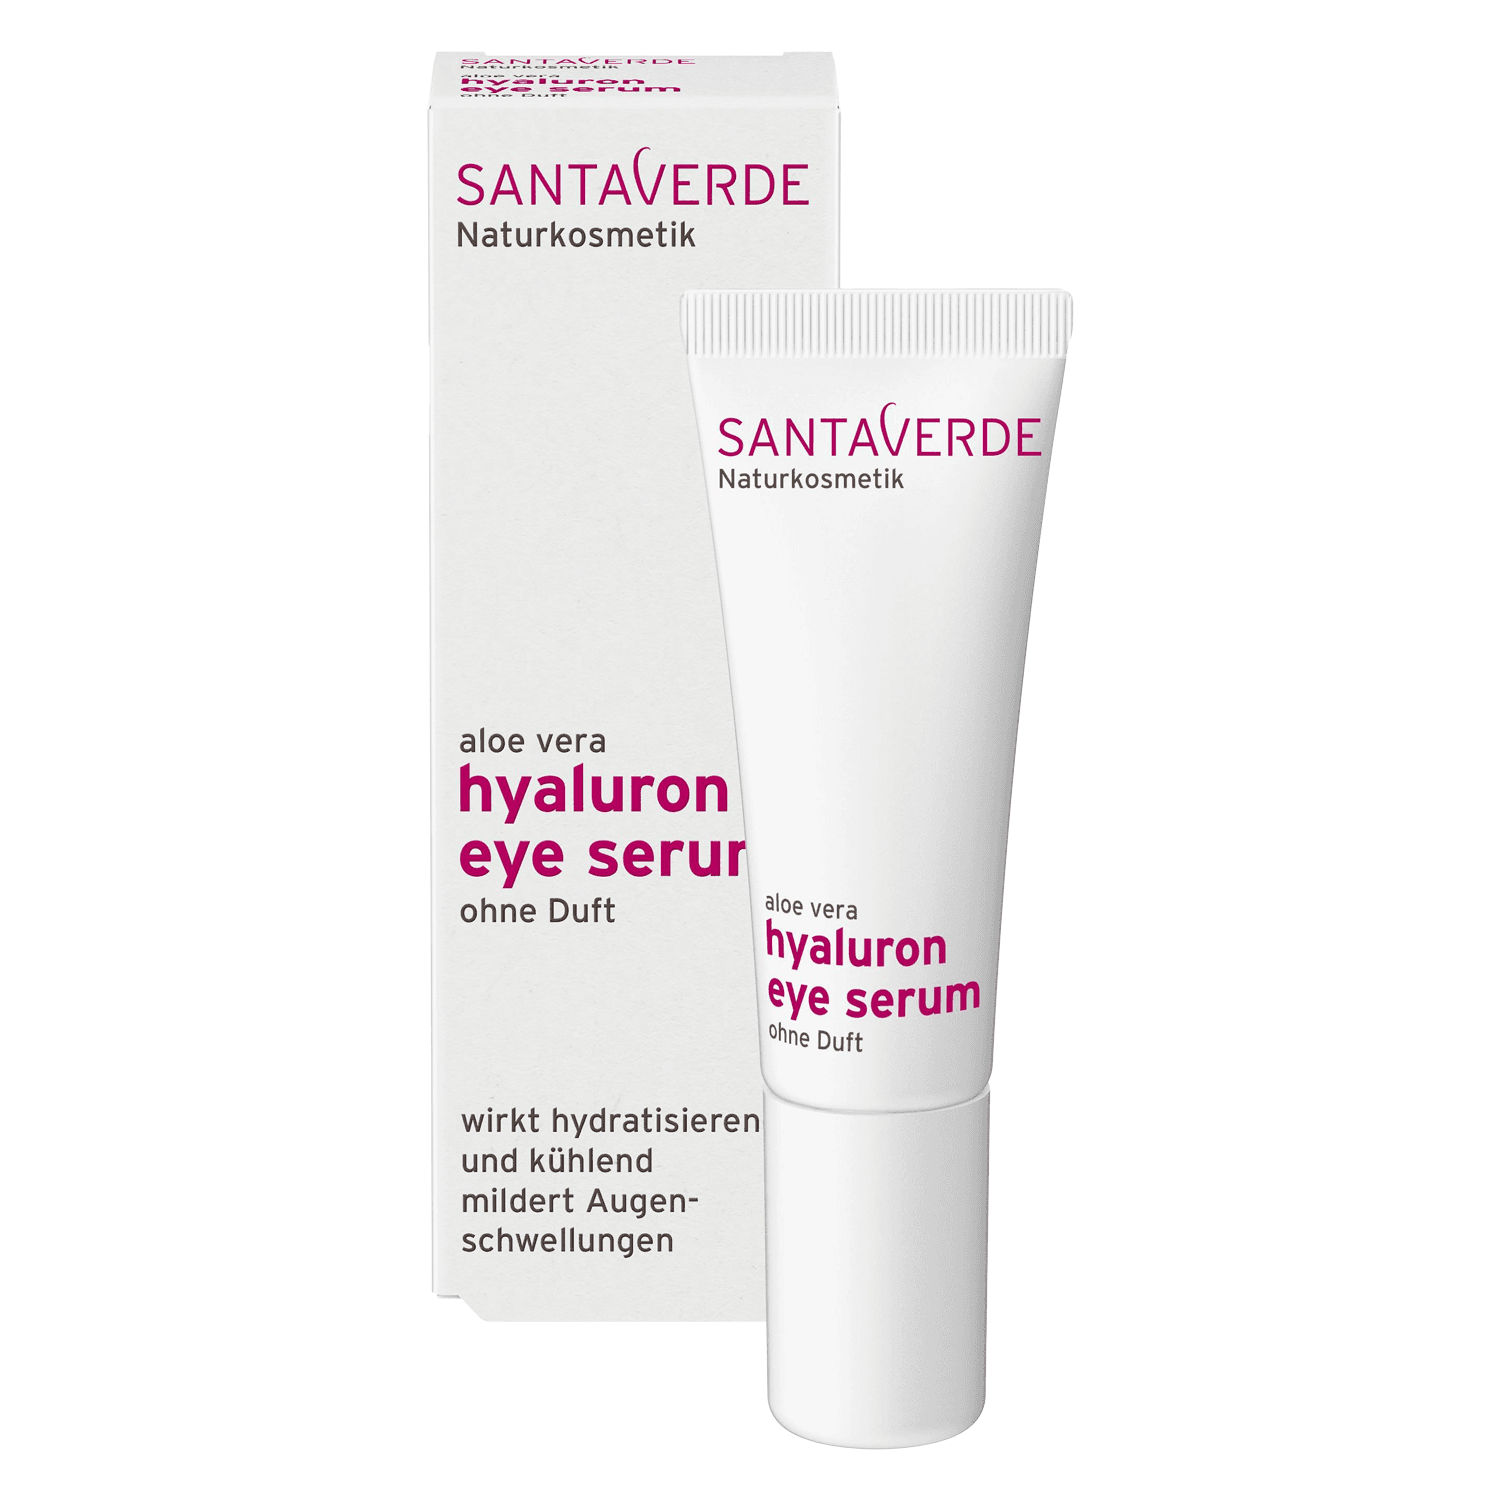 SANTAVERDE - aloe vera hyaluron eye serum sans parfum